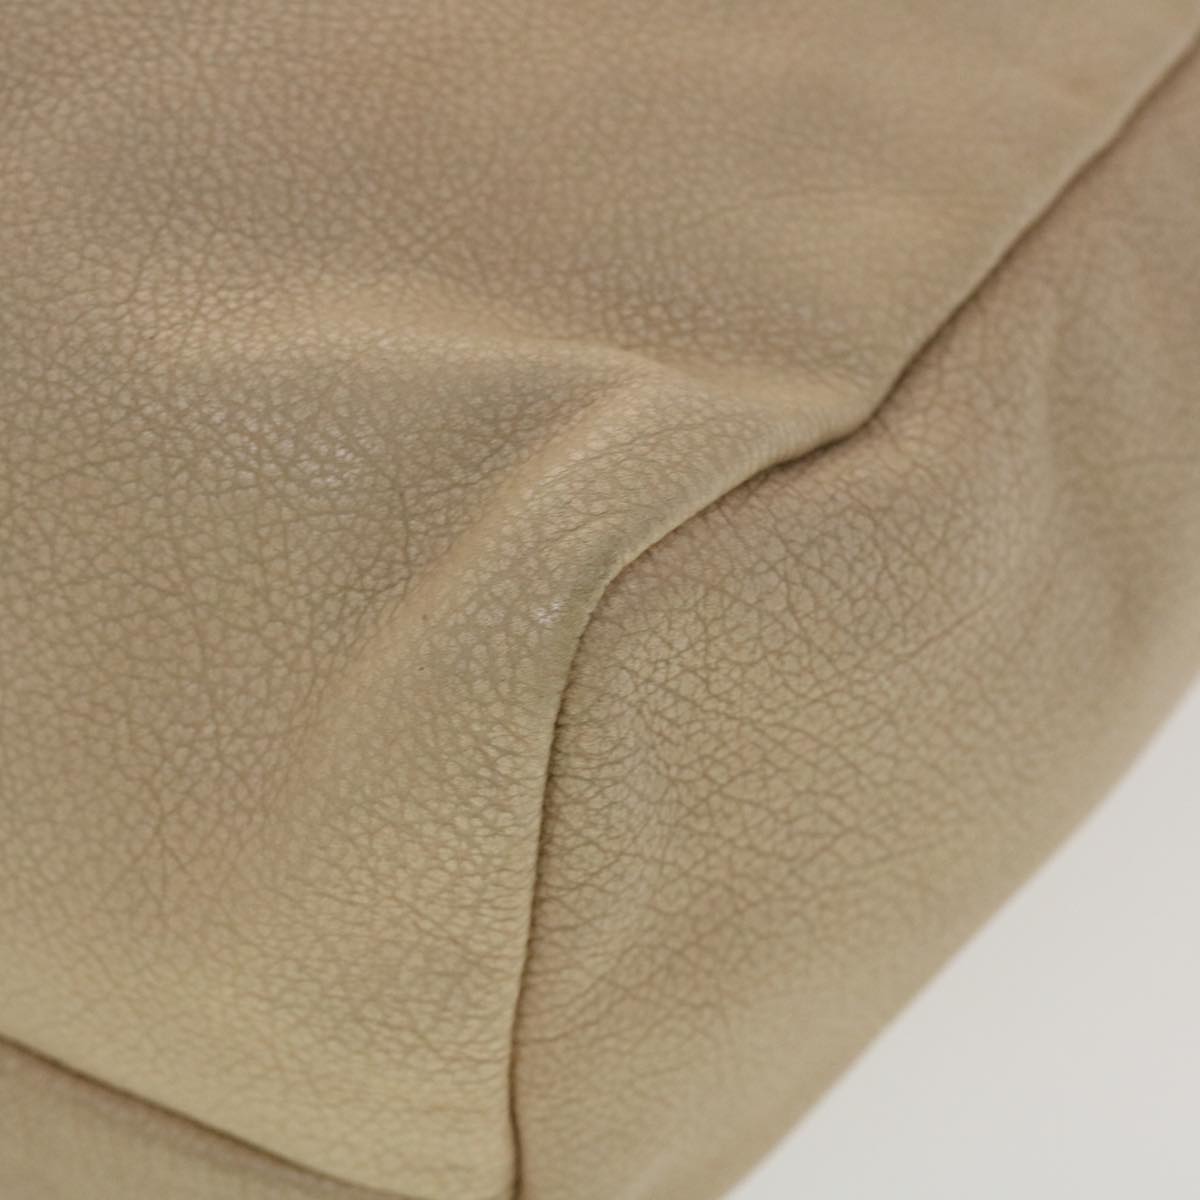 PRADA Hand Bag Leather Beige Auth bs5551